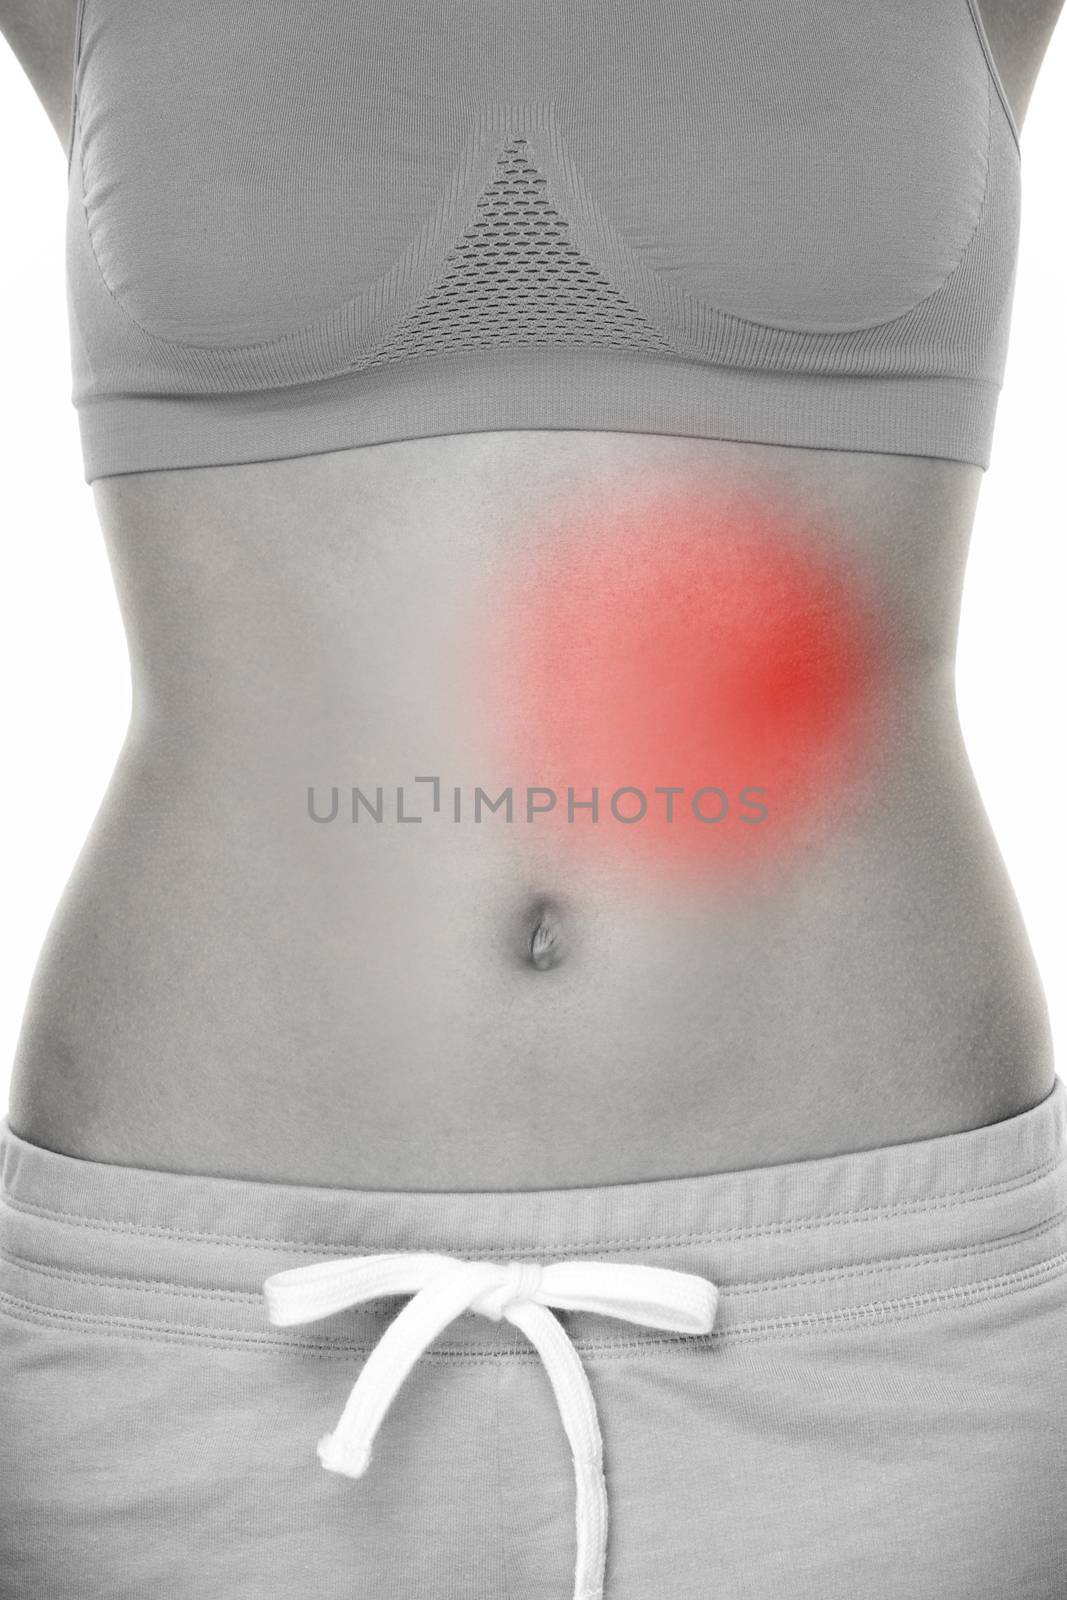 Female body pain - stomach injury by Maridav